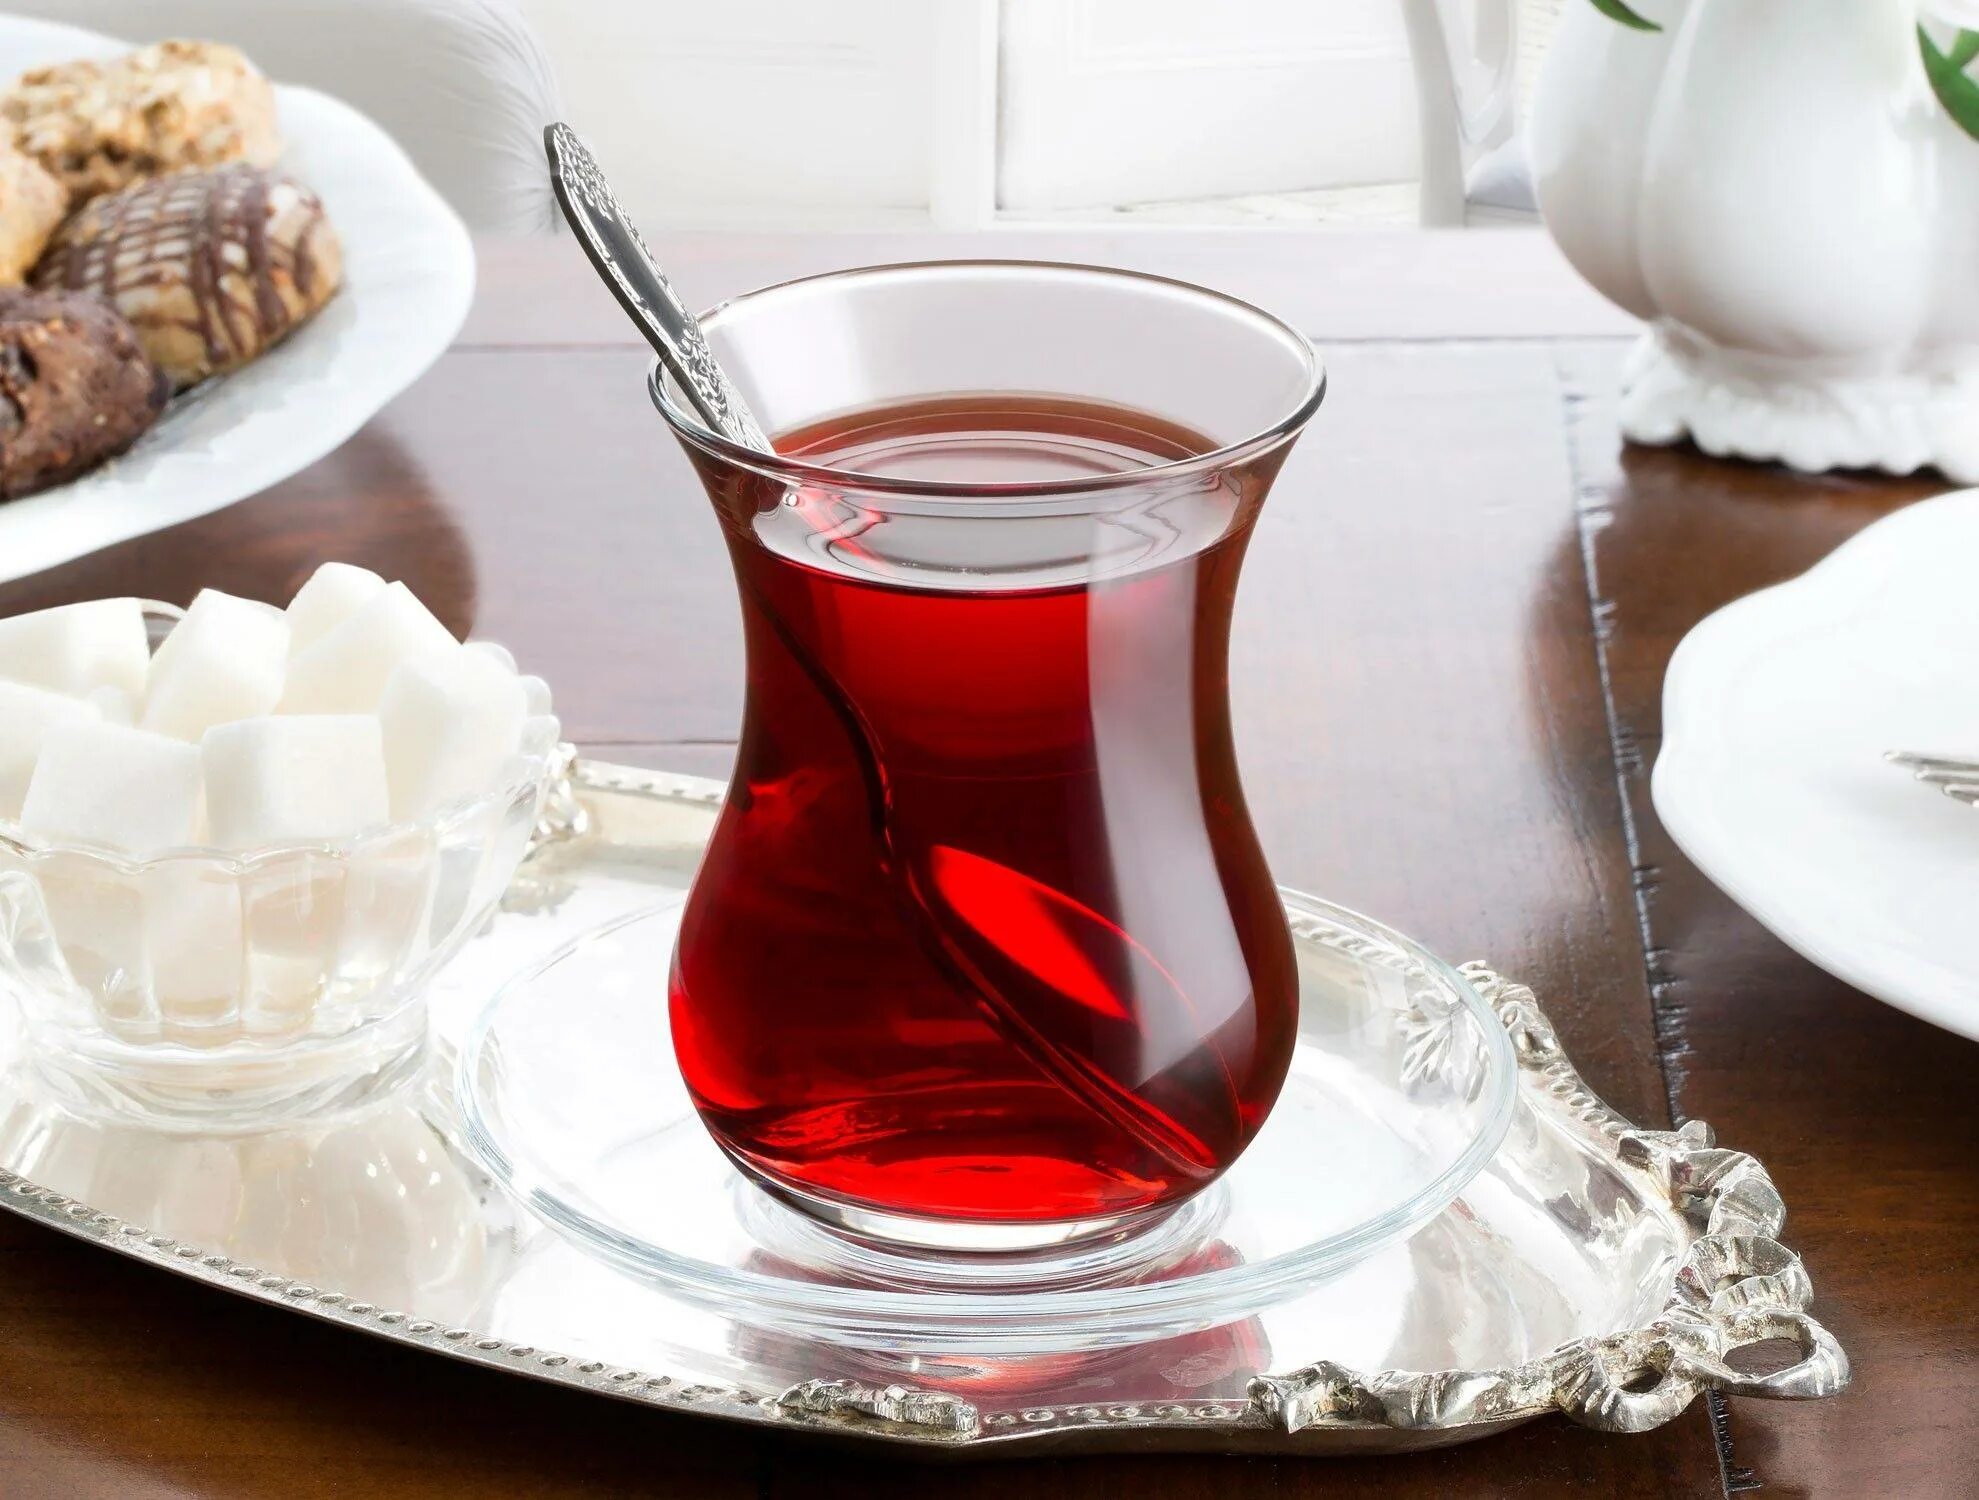 Pasabahce армуды с блюдцем. Армуду чай Азербайджан. Турецкие стаканы для чая. Чай в стакане.